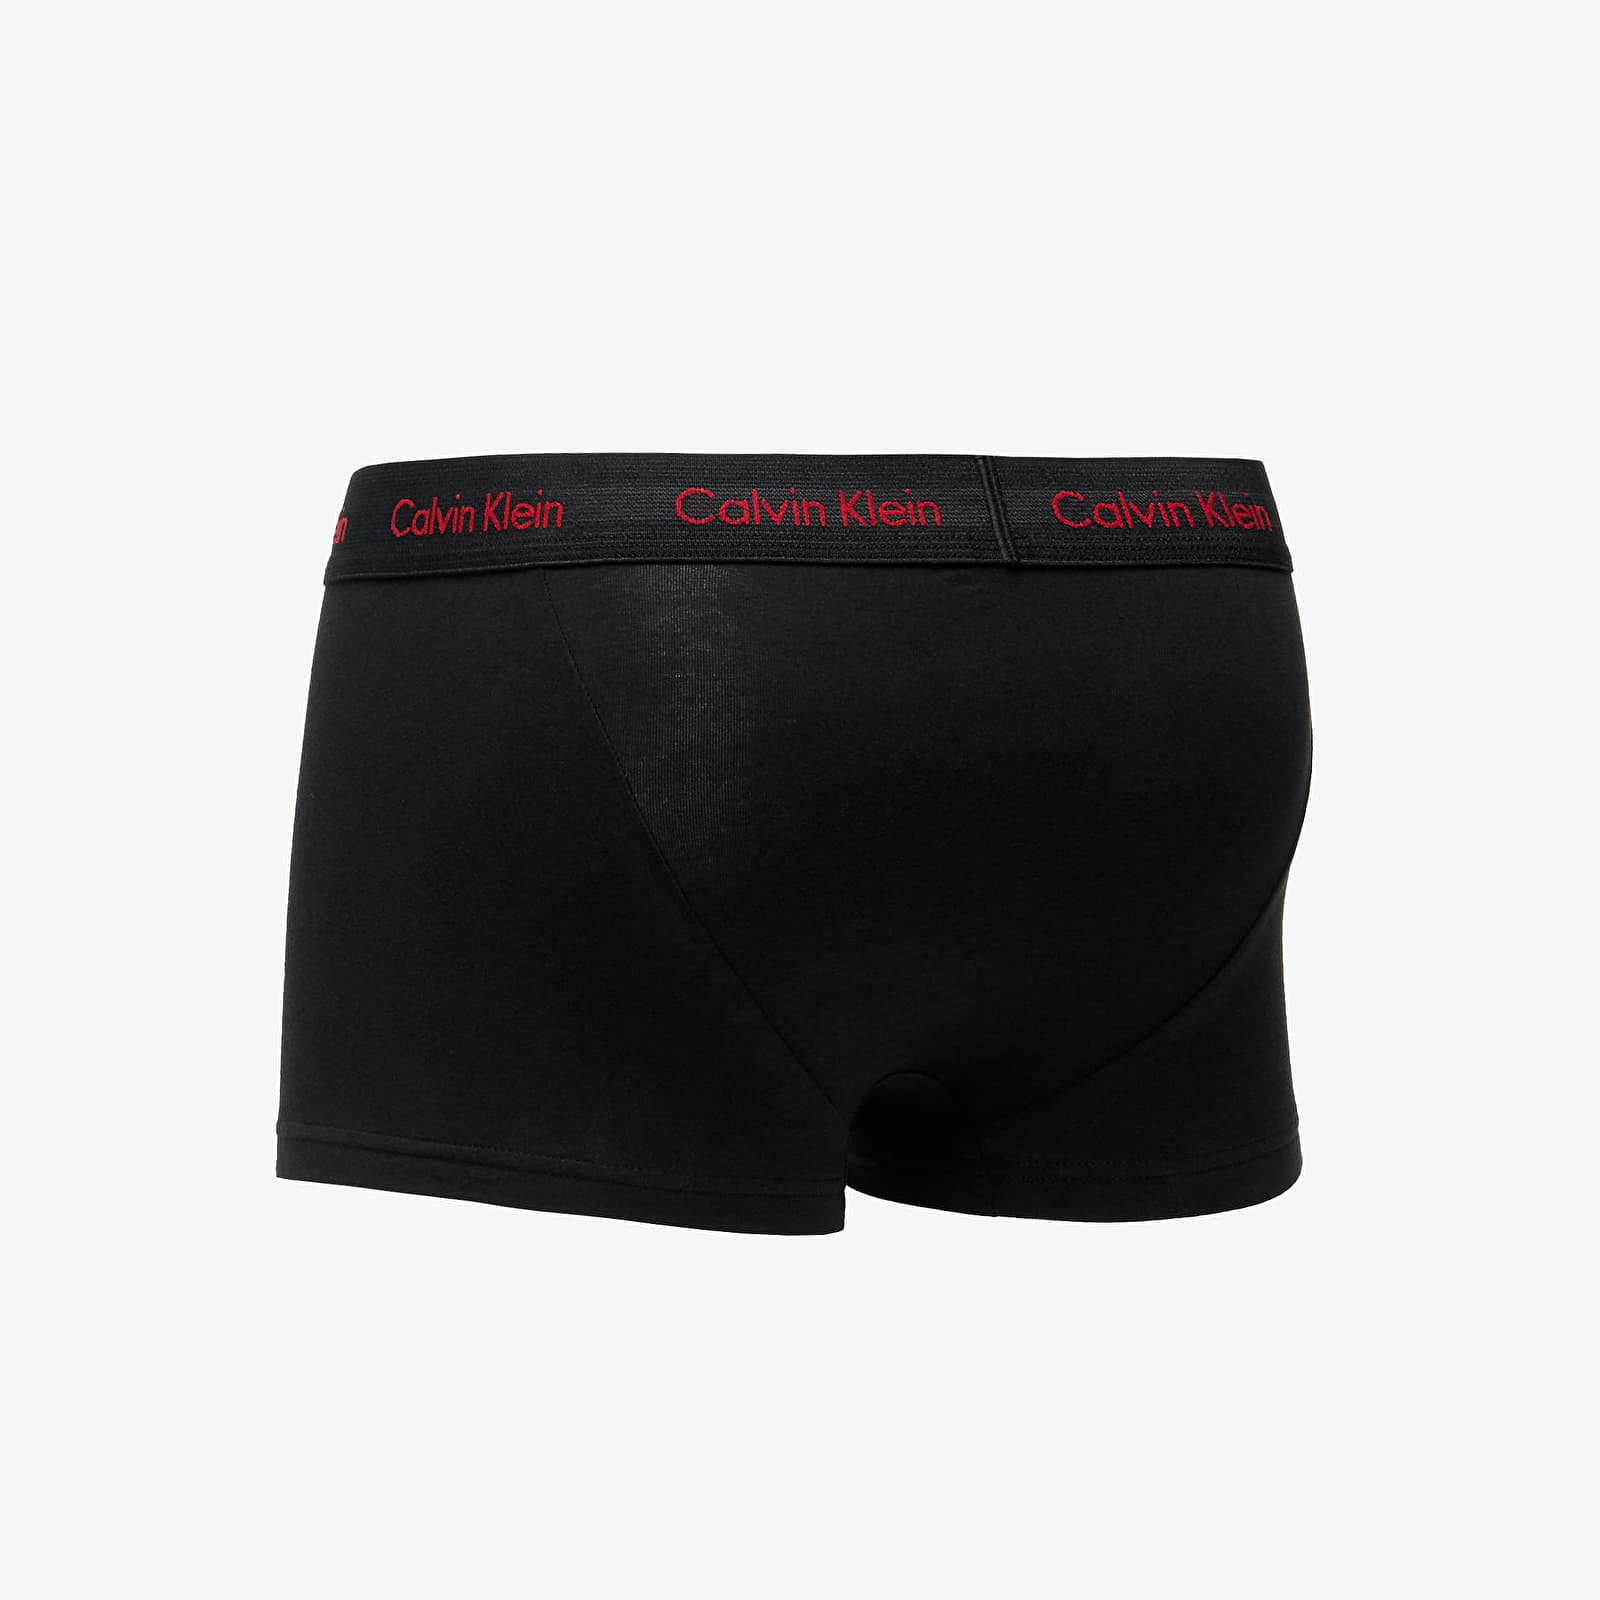 Boxer shorts Calvin Klein Cotton Stretch Low Rise Trunk 3-Pack Black